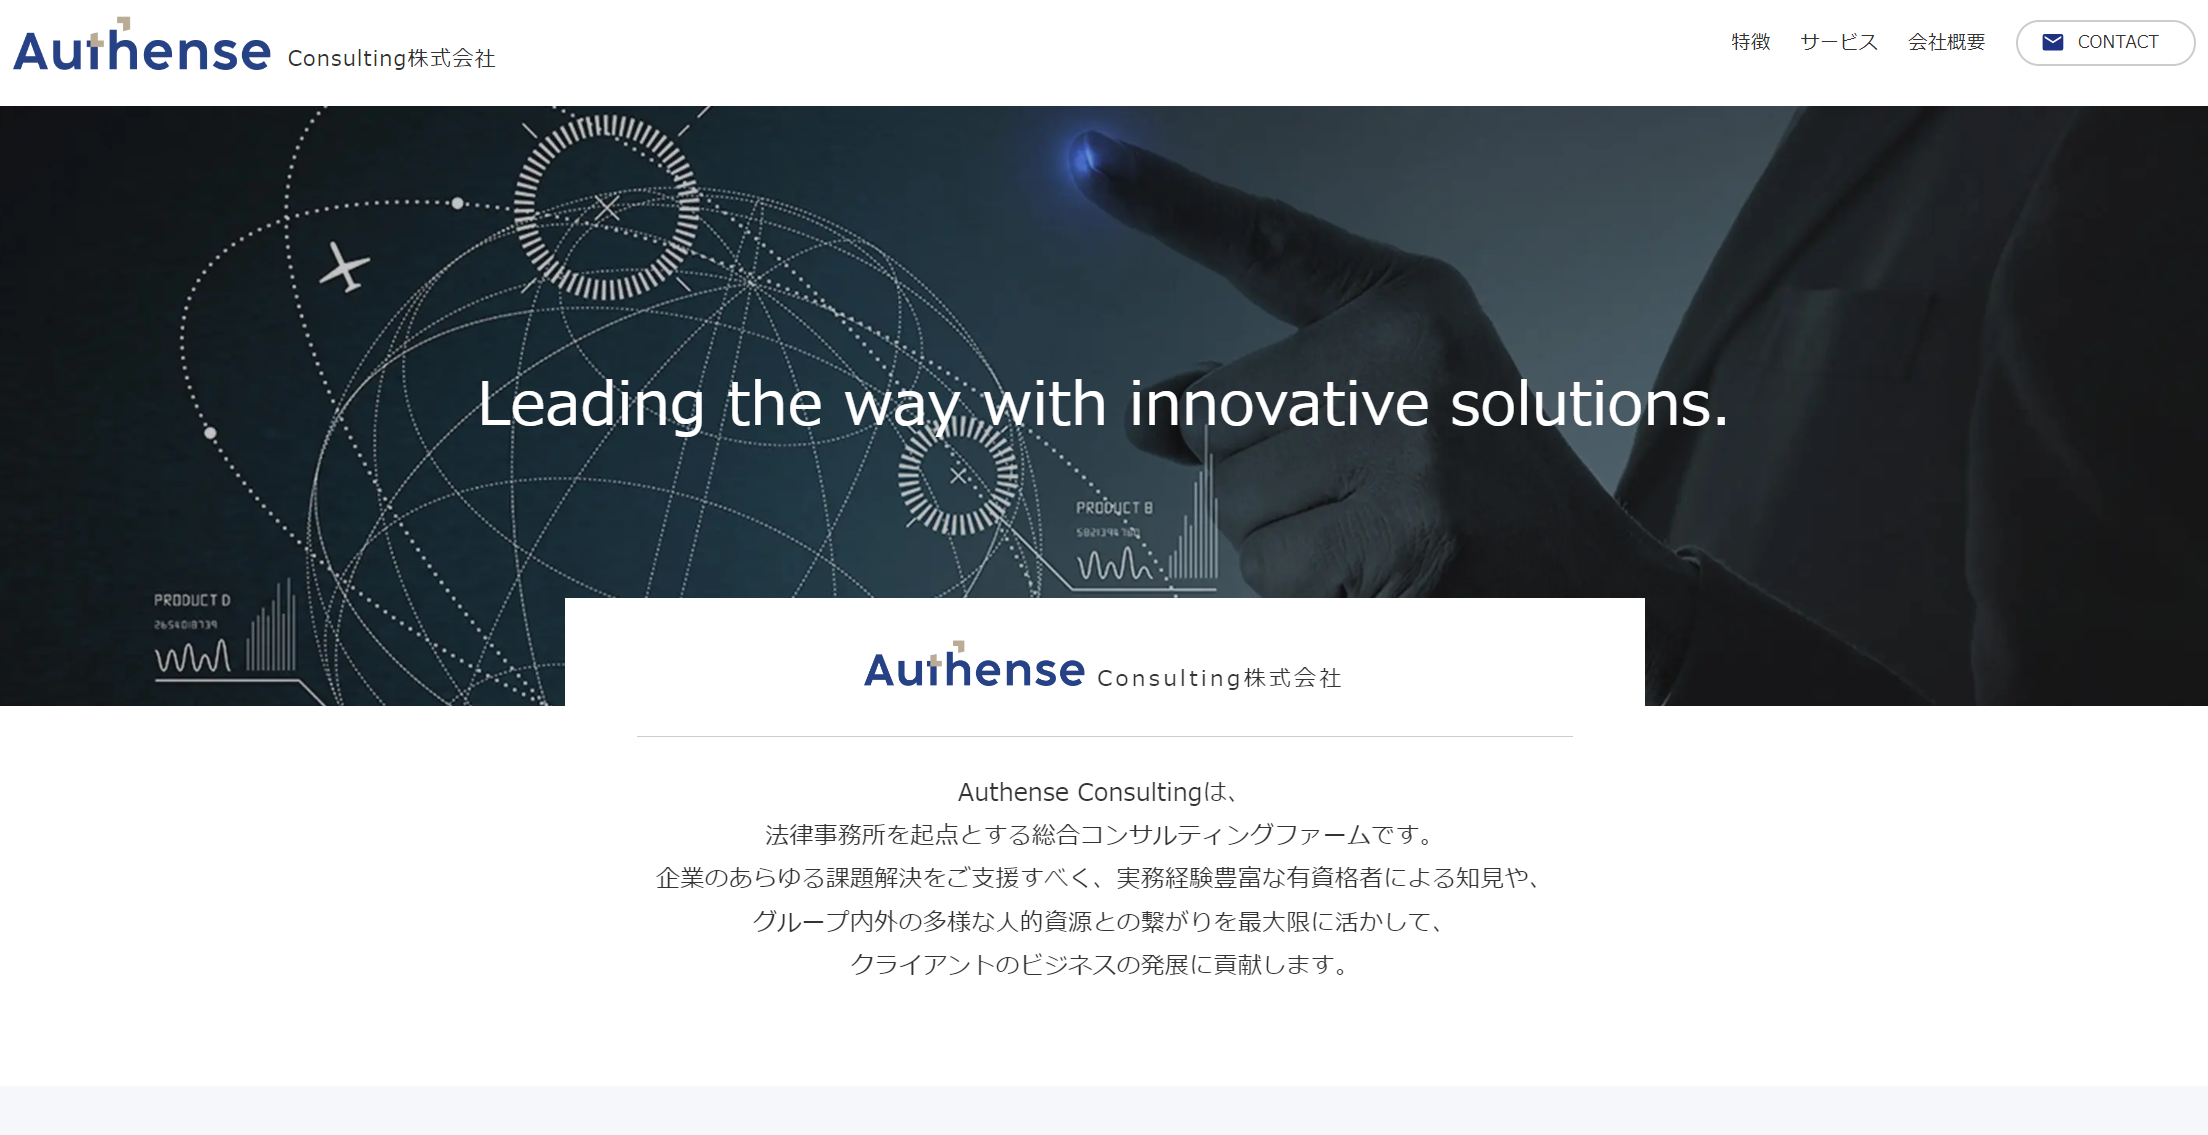 Authense Consulting株式会社 Webサイトリニューアル